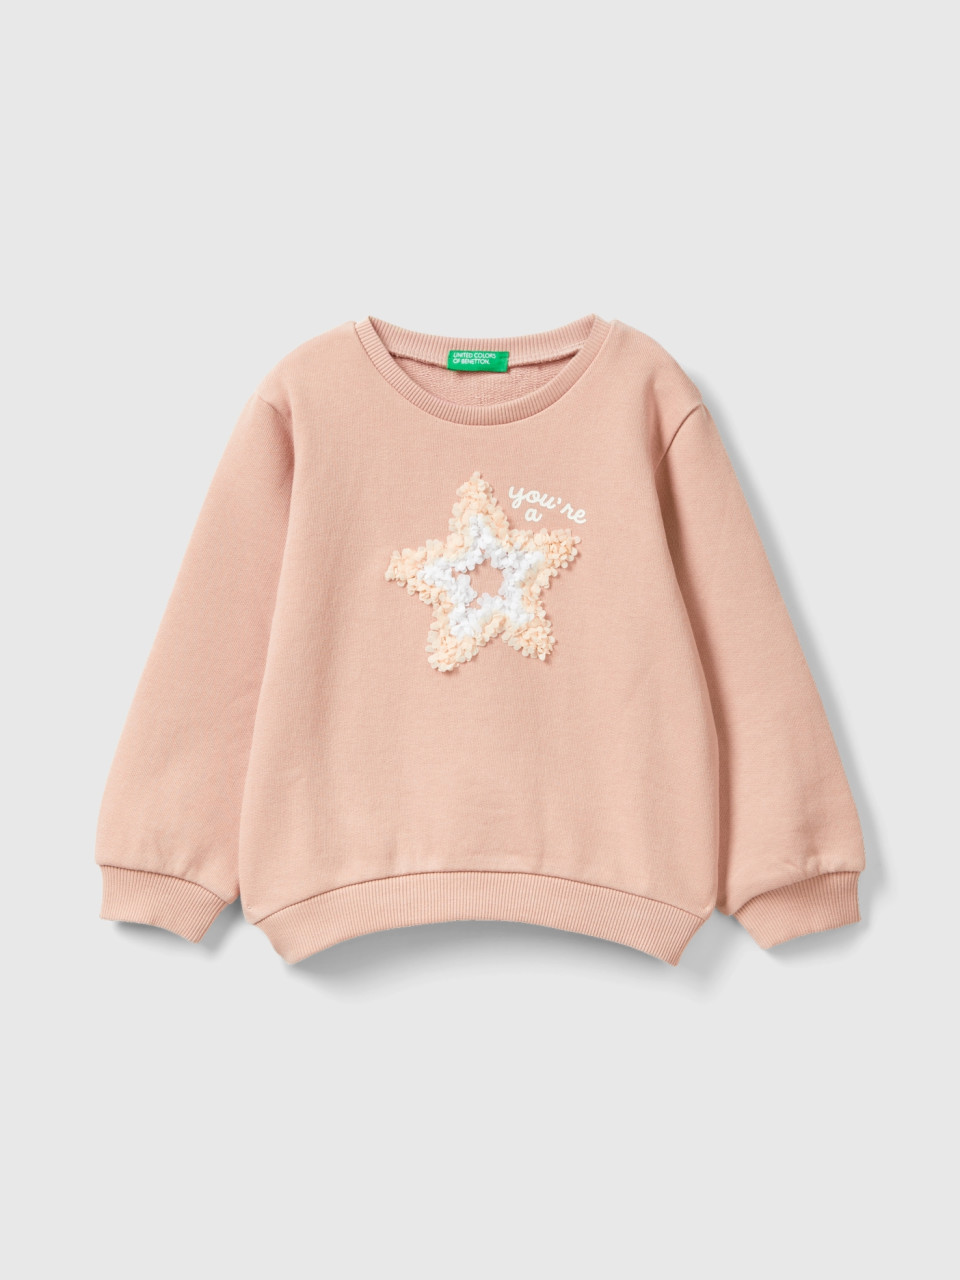 Benetton, Sweater Mit Applikationen Mit Blütenblatteffekt, Hautfarbe, female